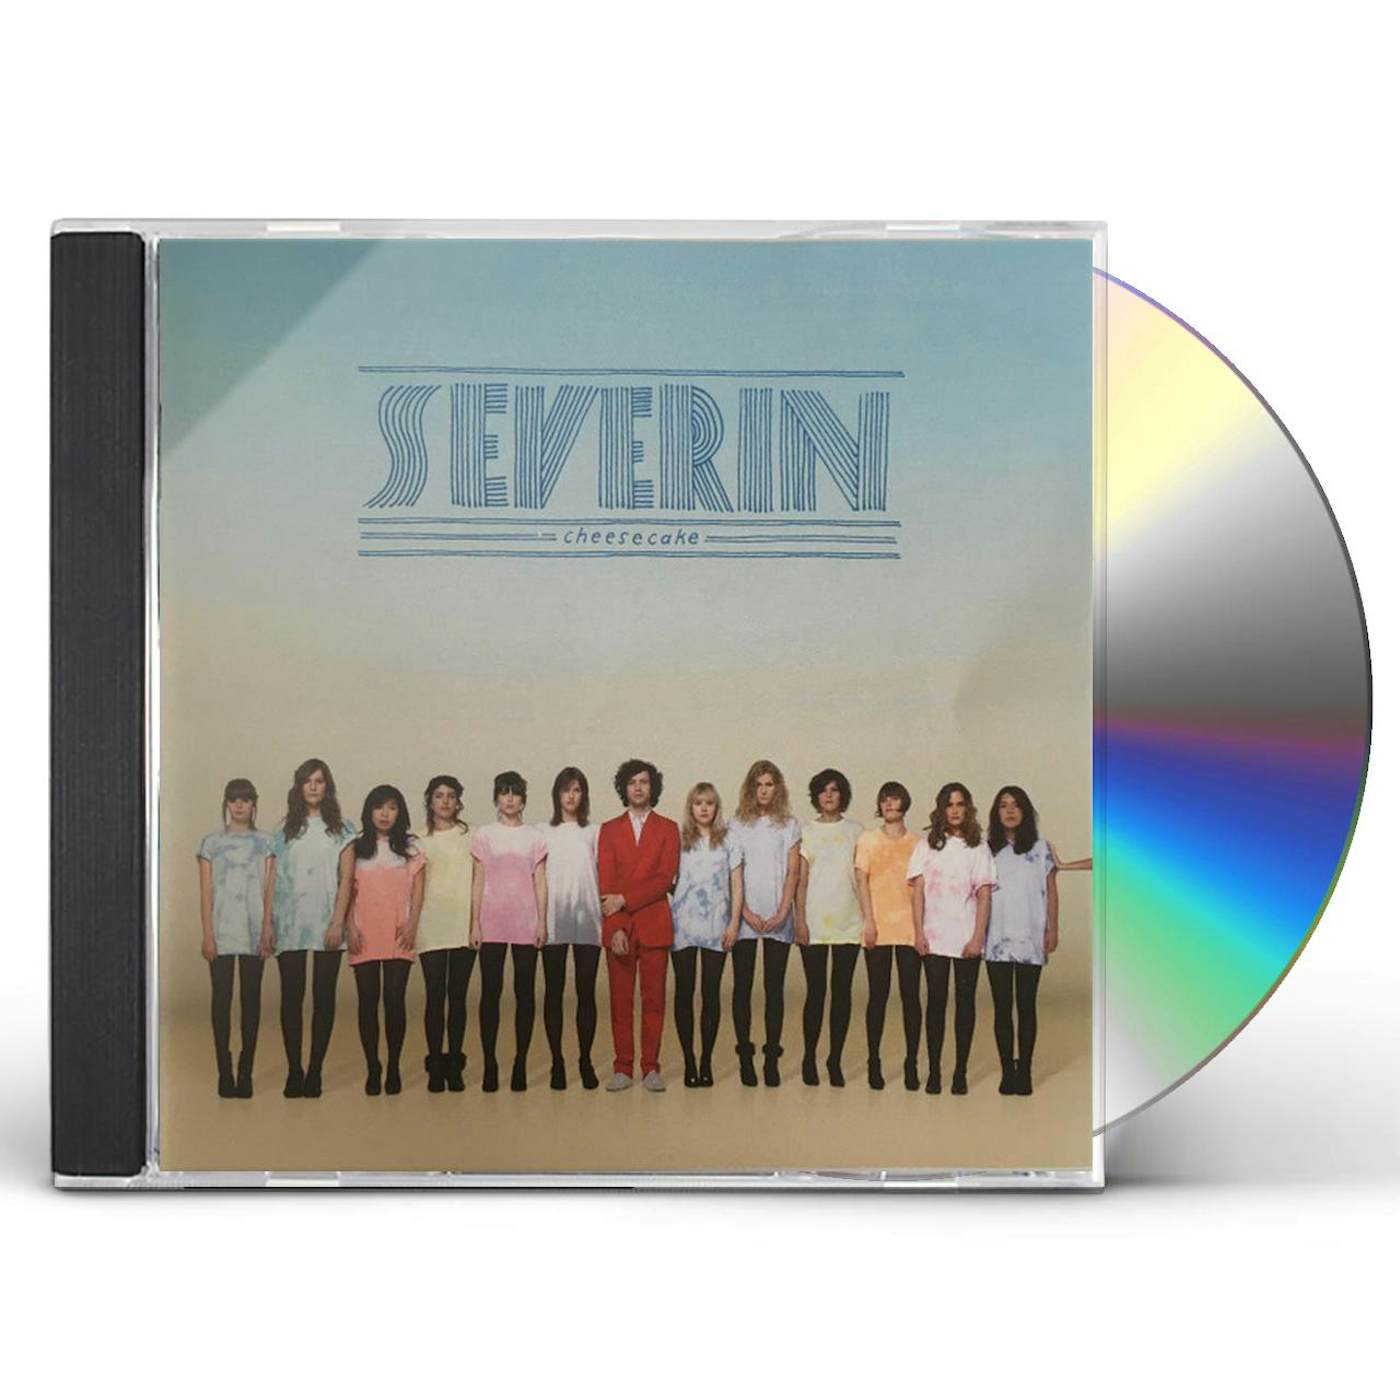 Séverin CHEESECAKE CD